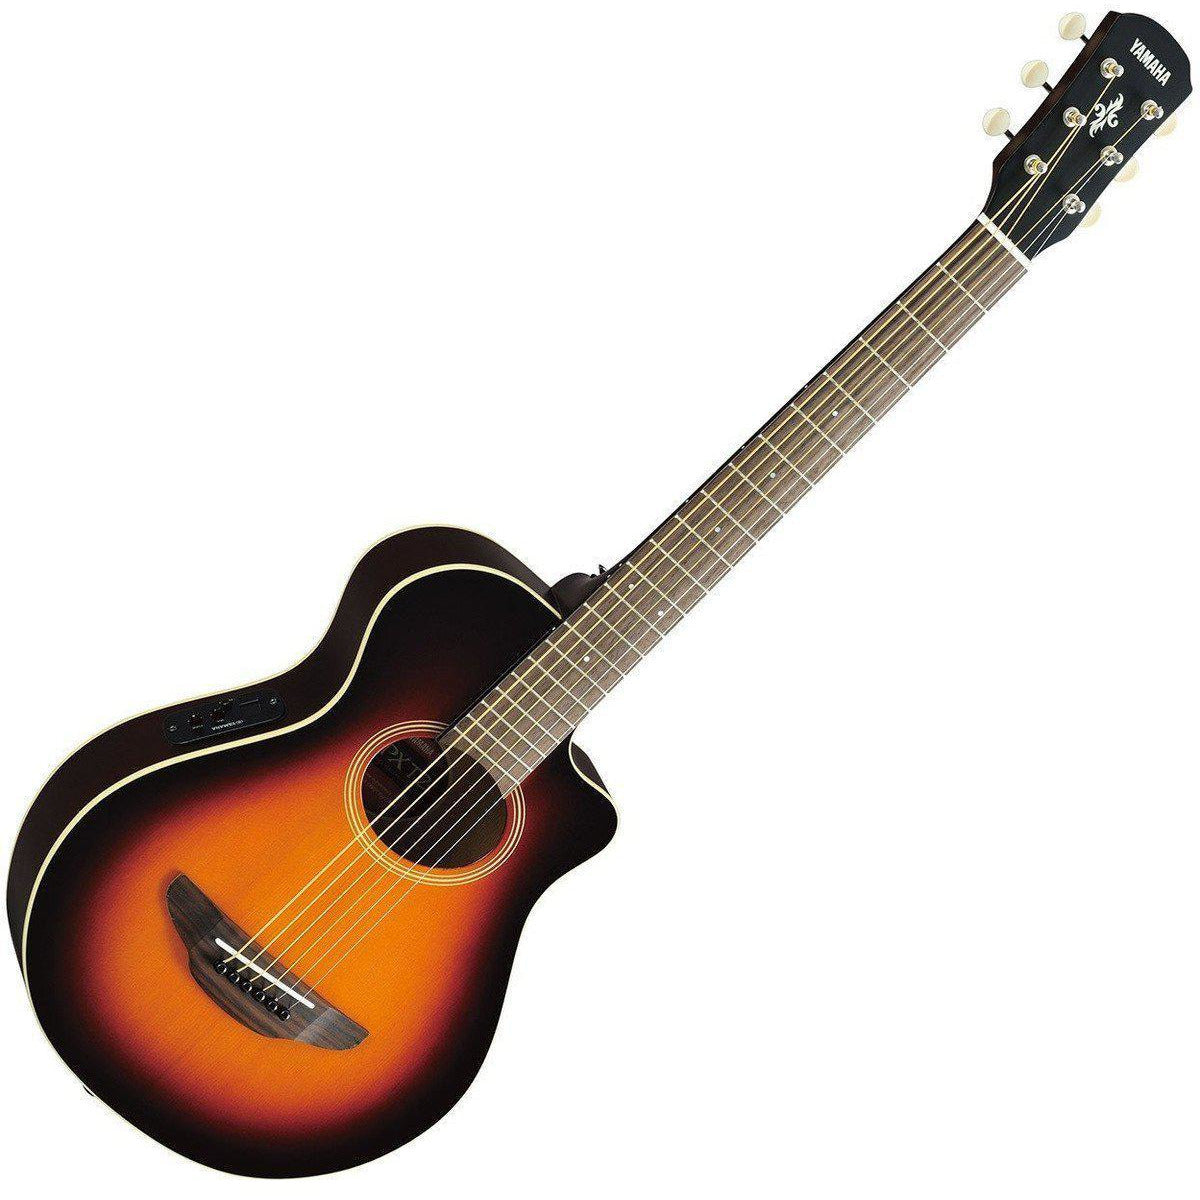 Yamaha APXT2 3/4 Size Acoustic Electric Guitar With Bag